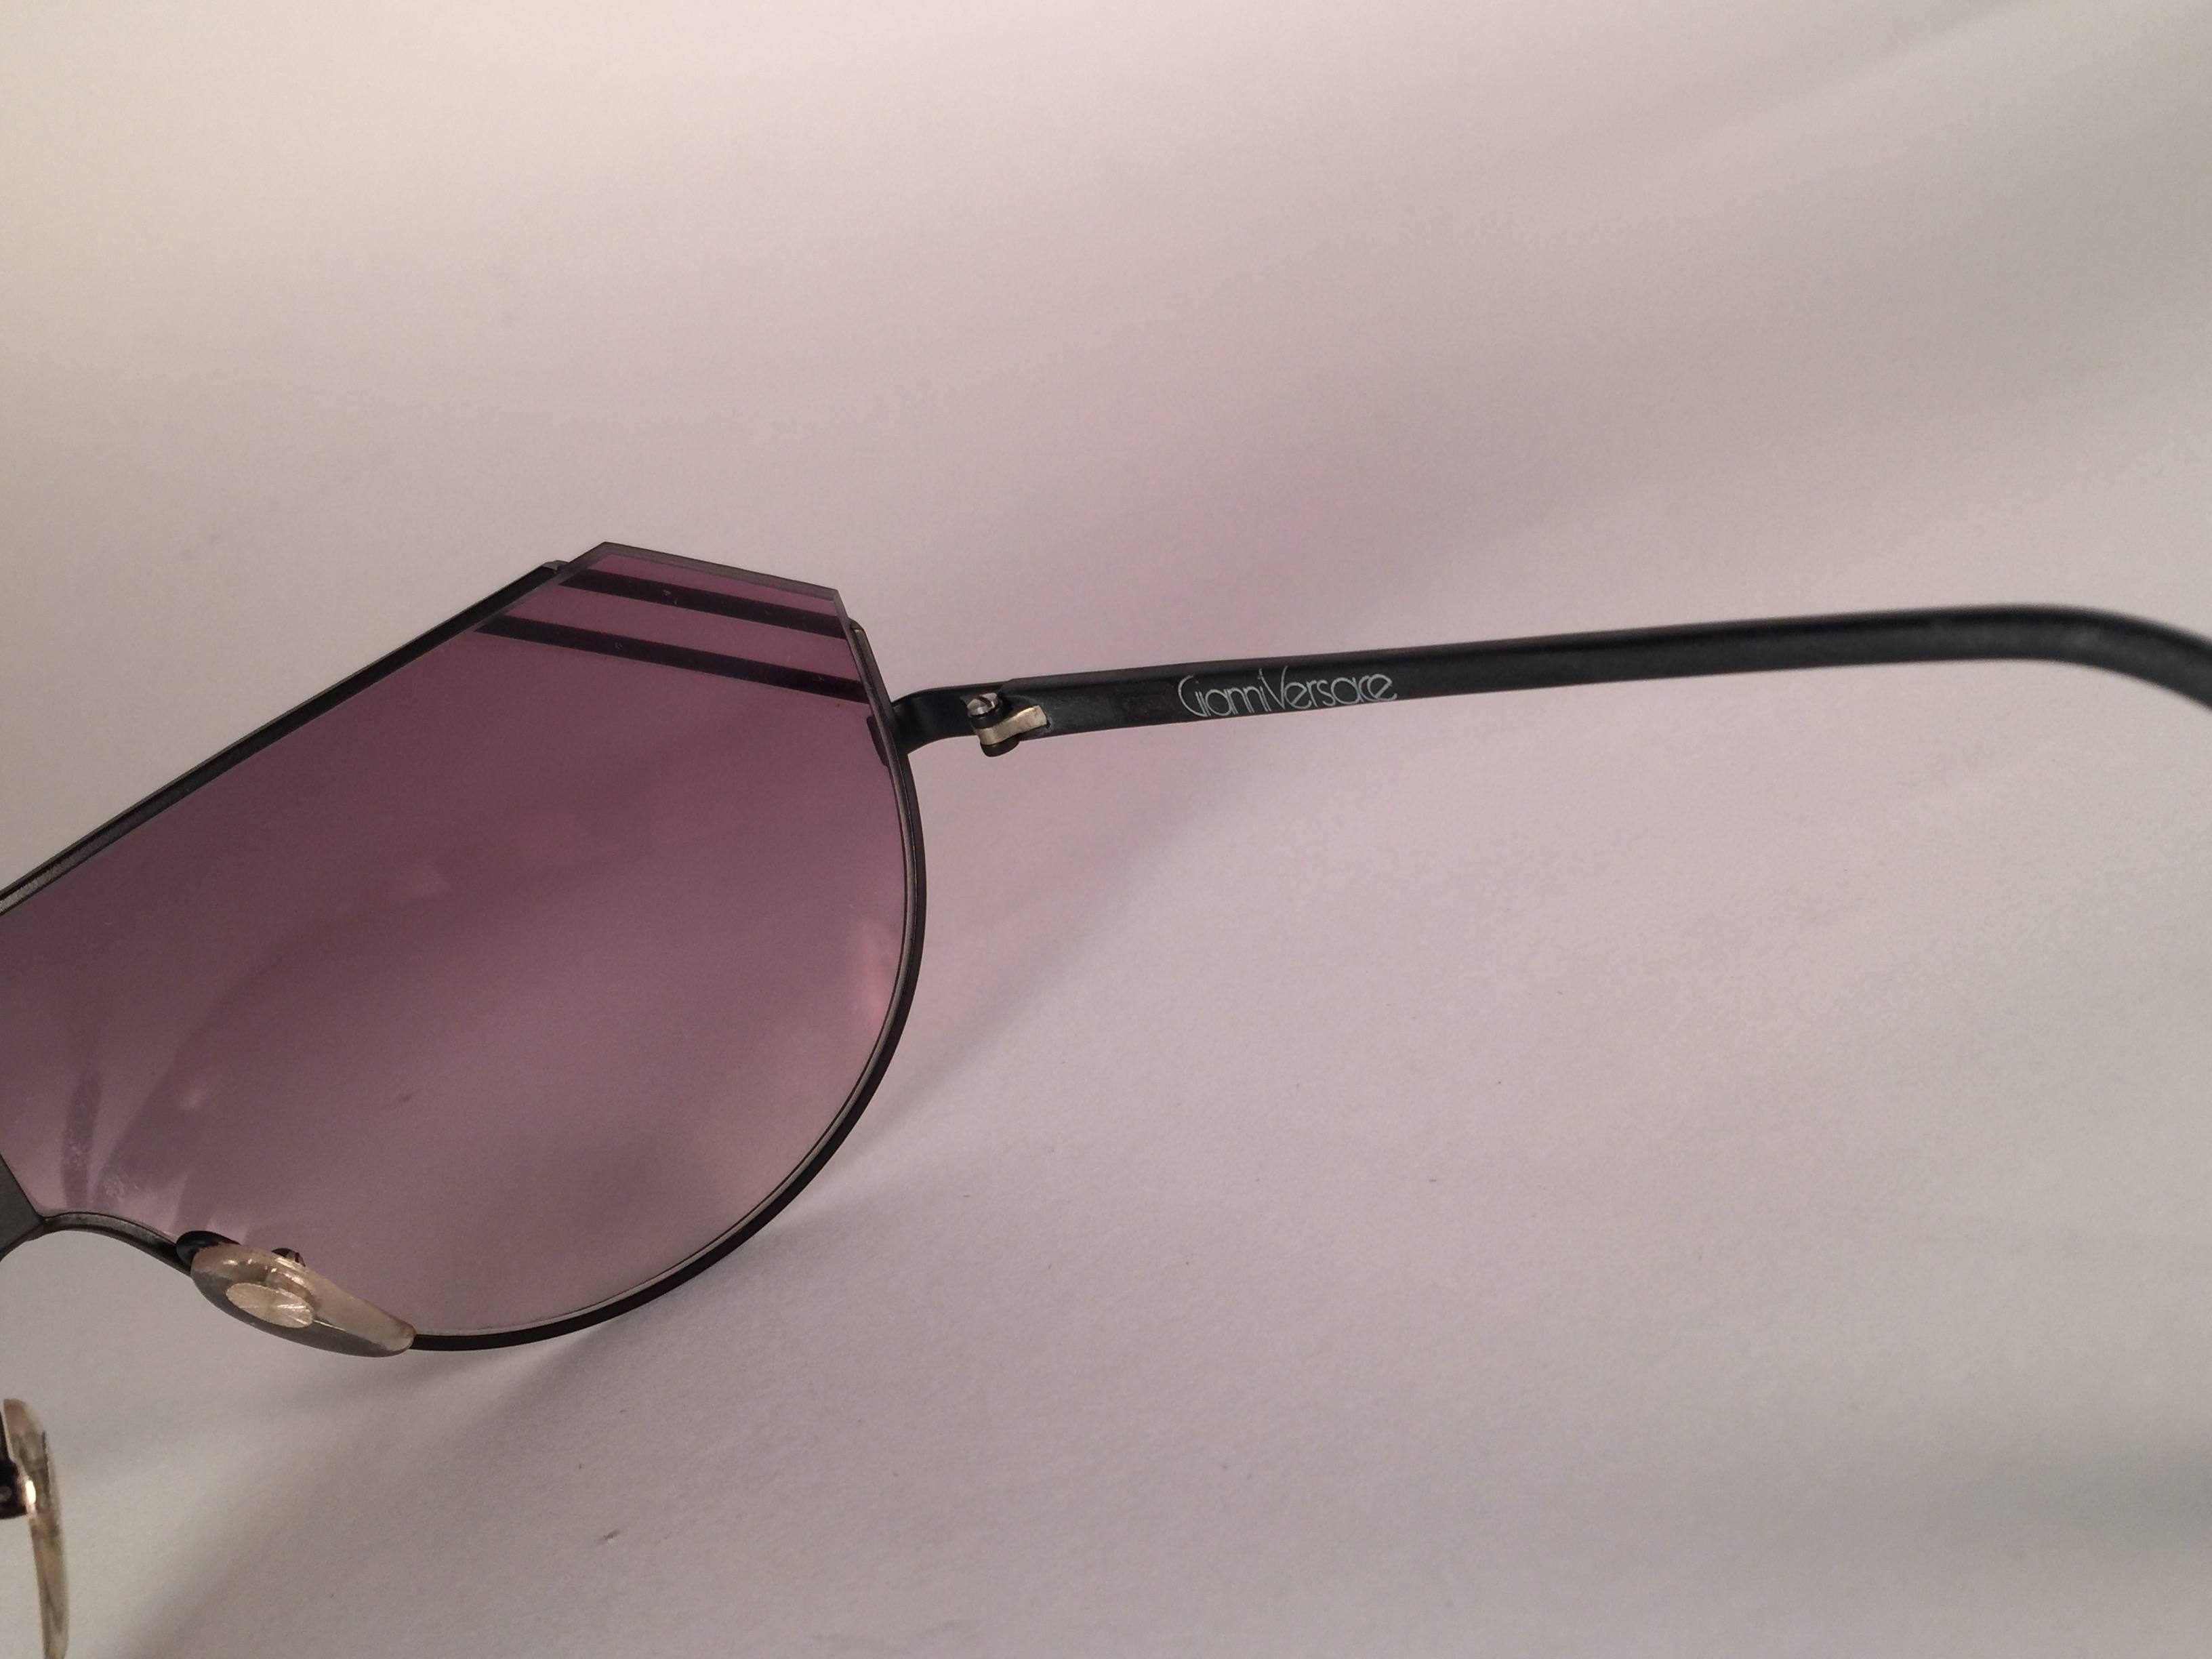 1990's sunglasses